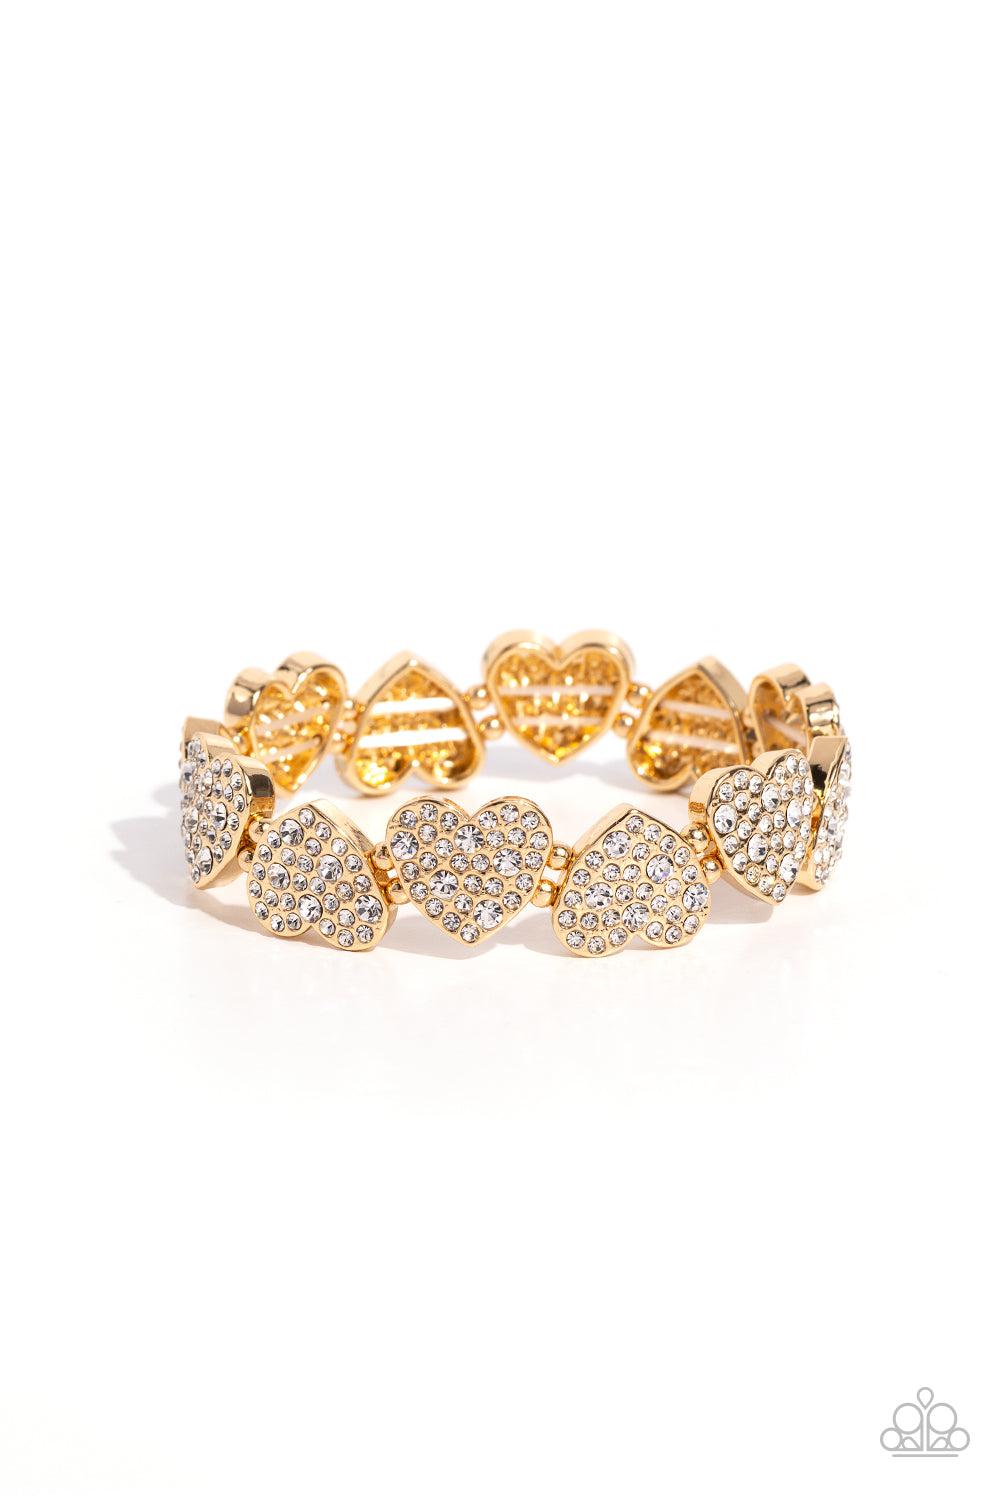 Headliner Heart Gold & White Rhinestone Bracelet - Paparazzi Accessories- lightbox - CarasShop.com - $5 Jewelry by Cara Jewels